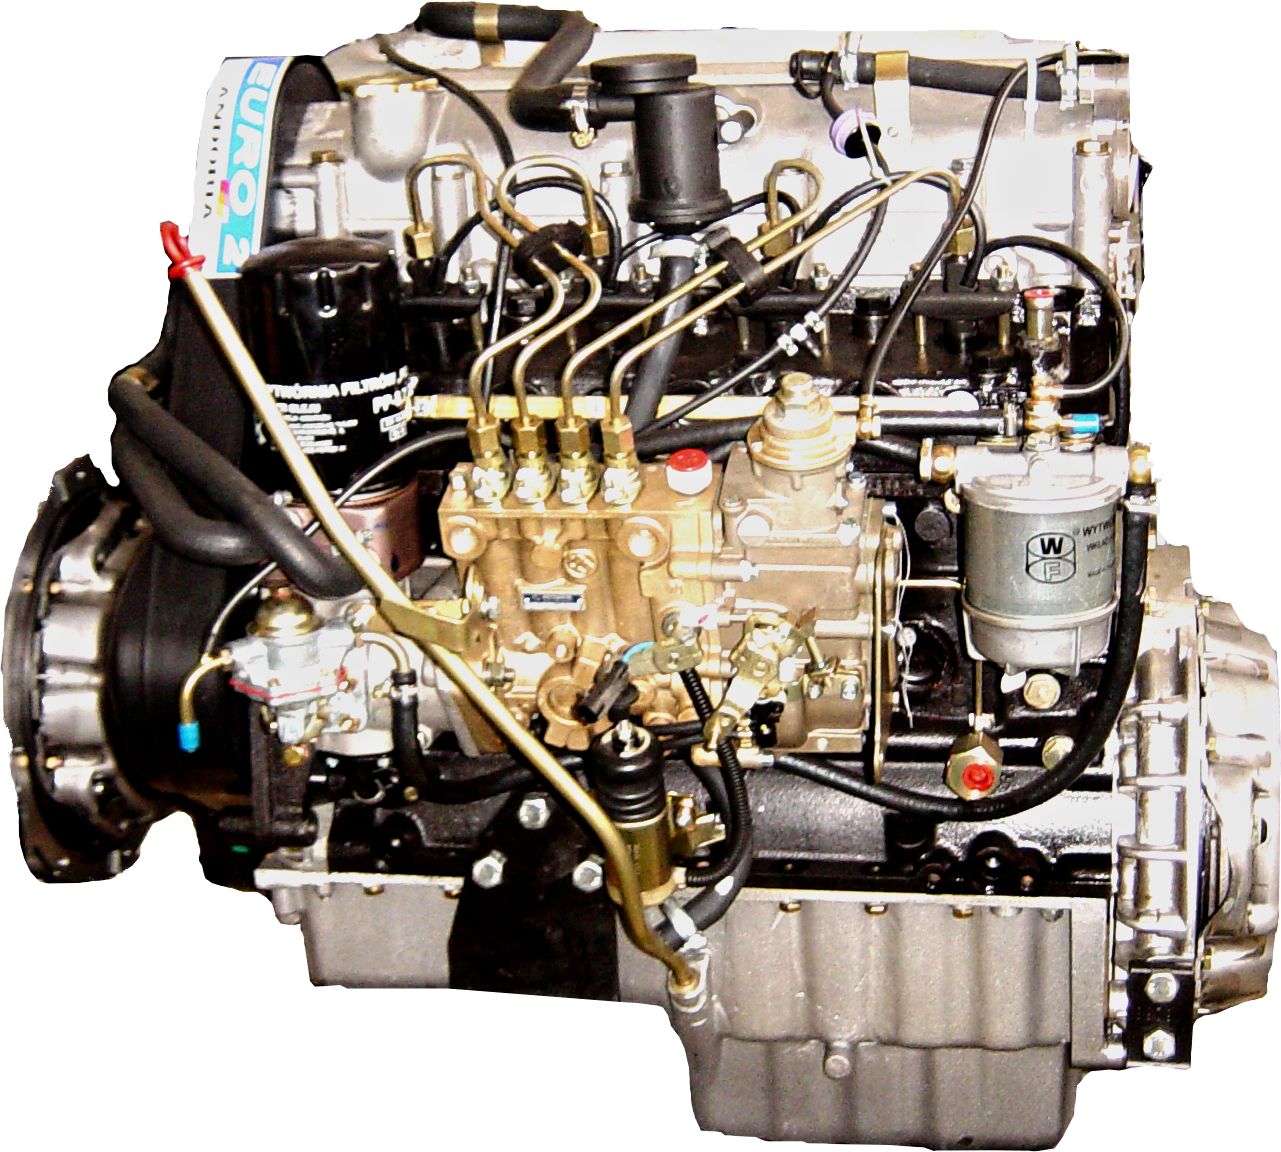 Andoria's S301D engine - omnia debes scire